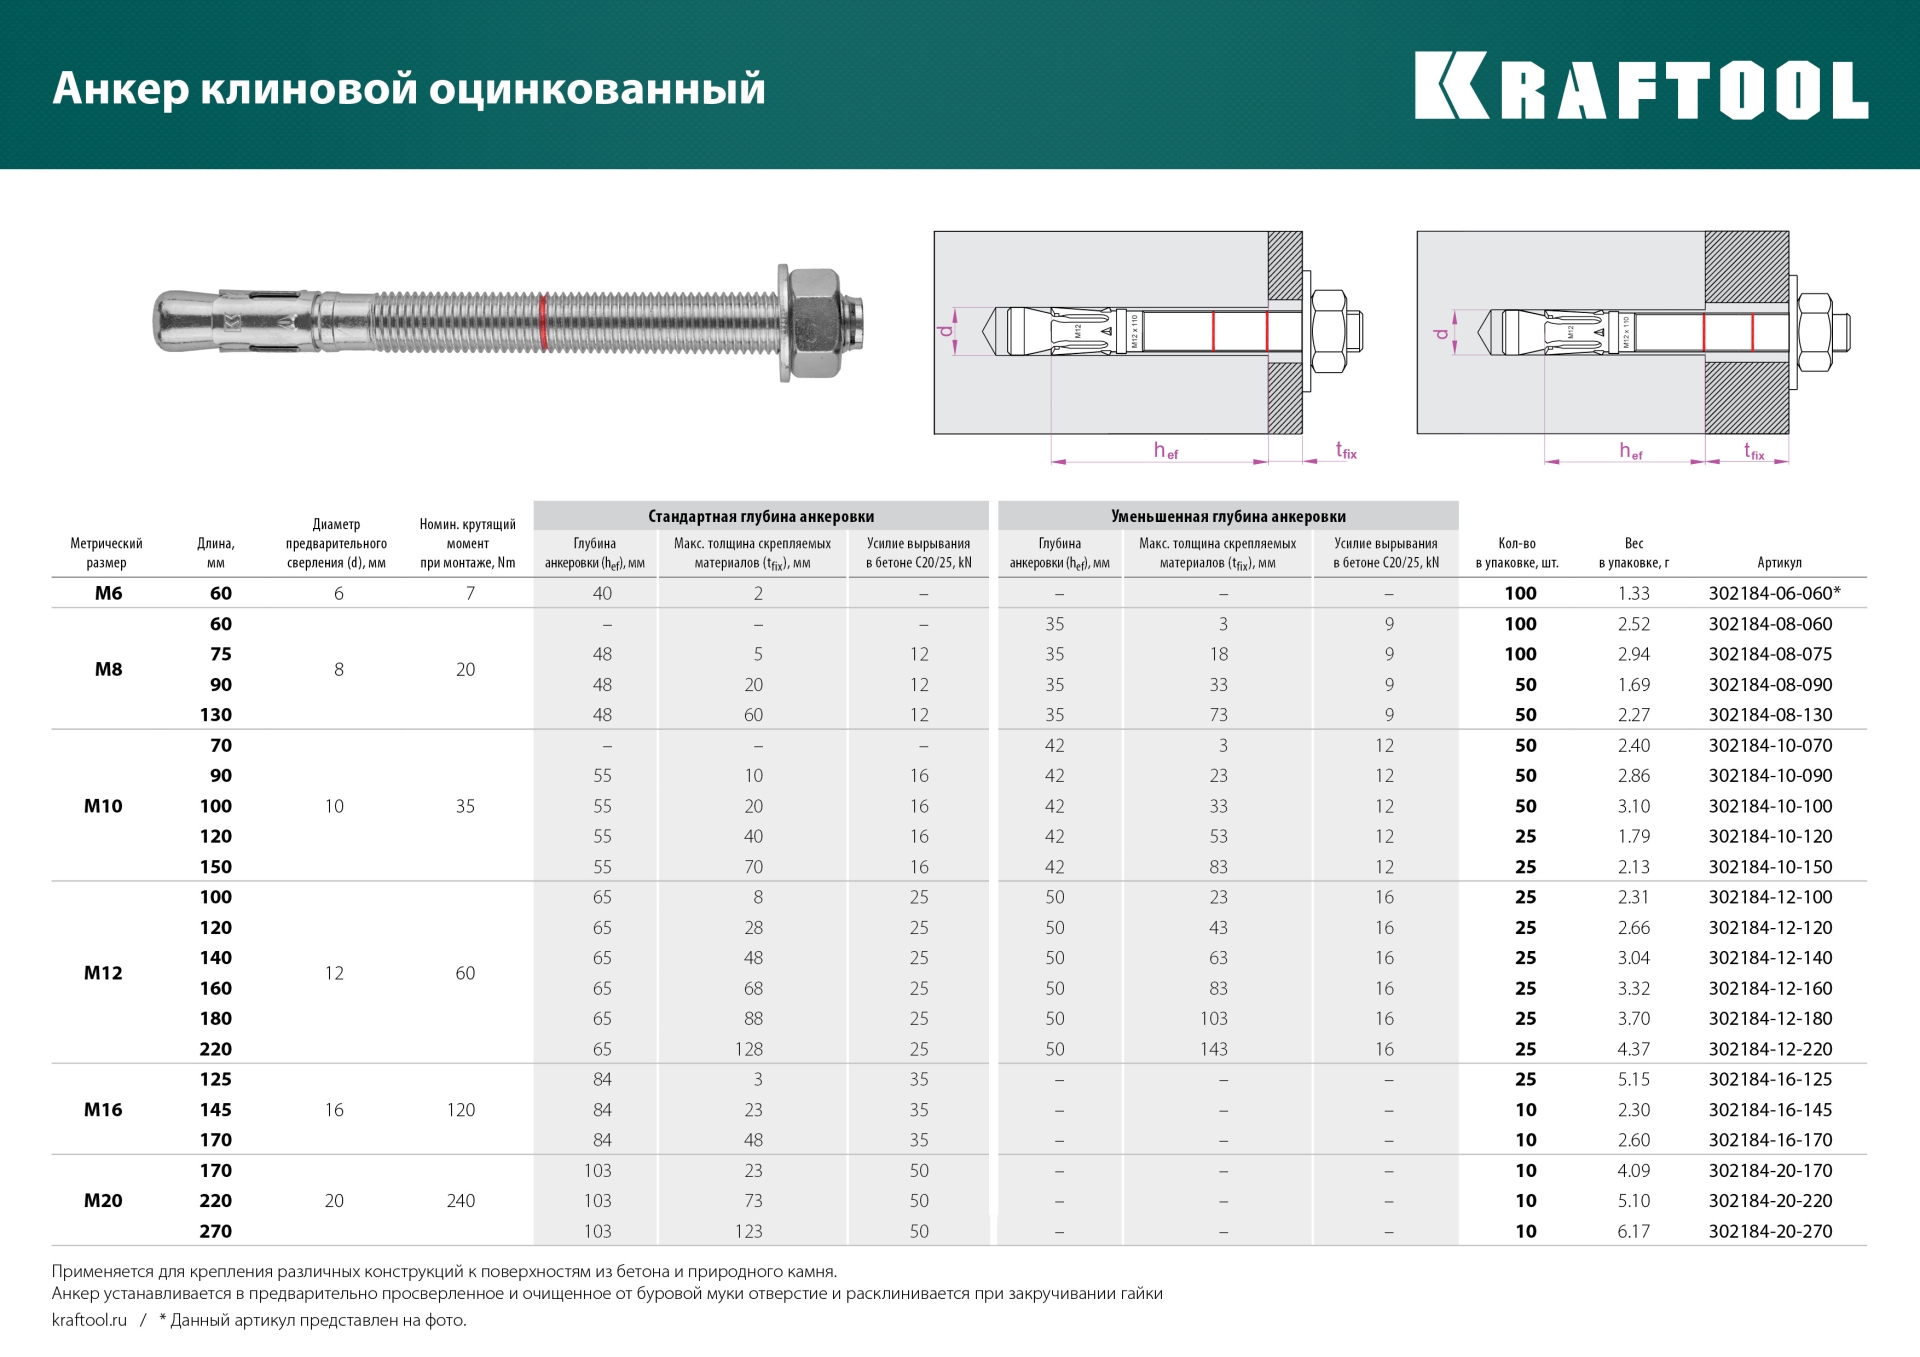 KRAFTOOL ETA Опция 7, М12 х 120, 25 шт, клиновой анкер (302184-12-120)